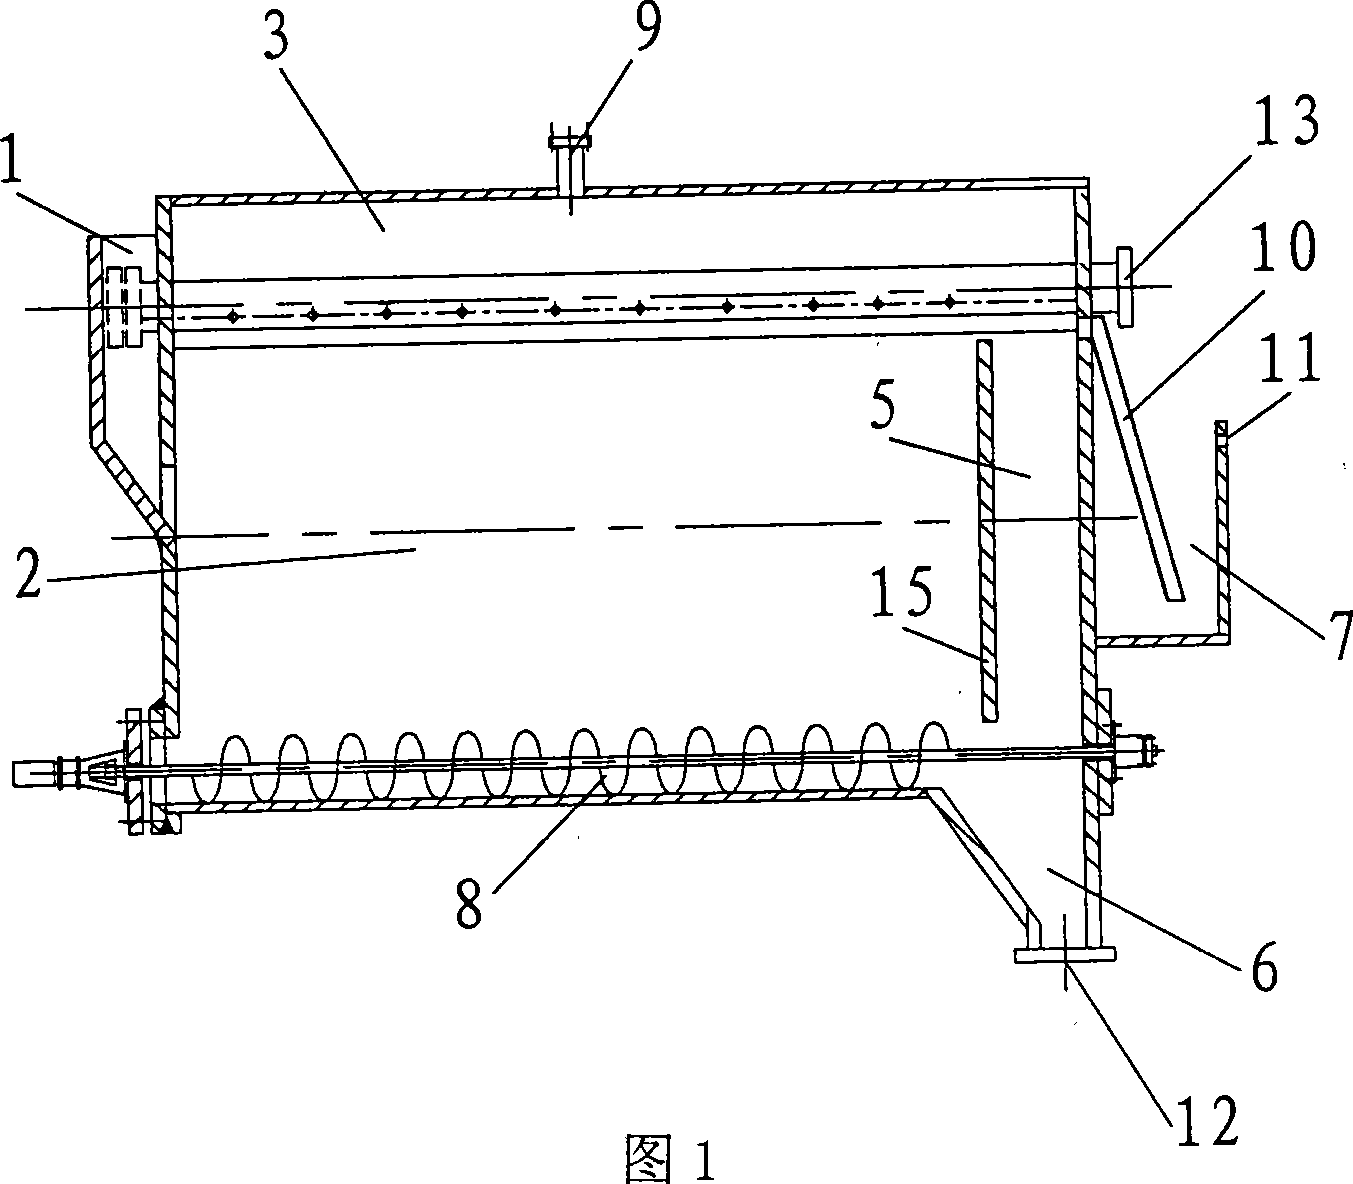 Horizontal type anaerobic reactor